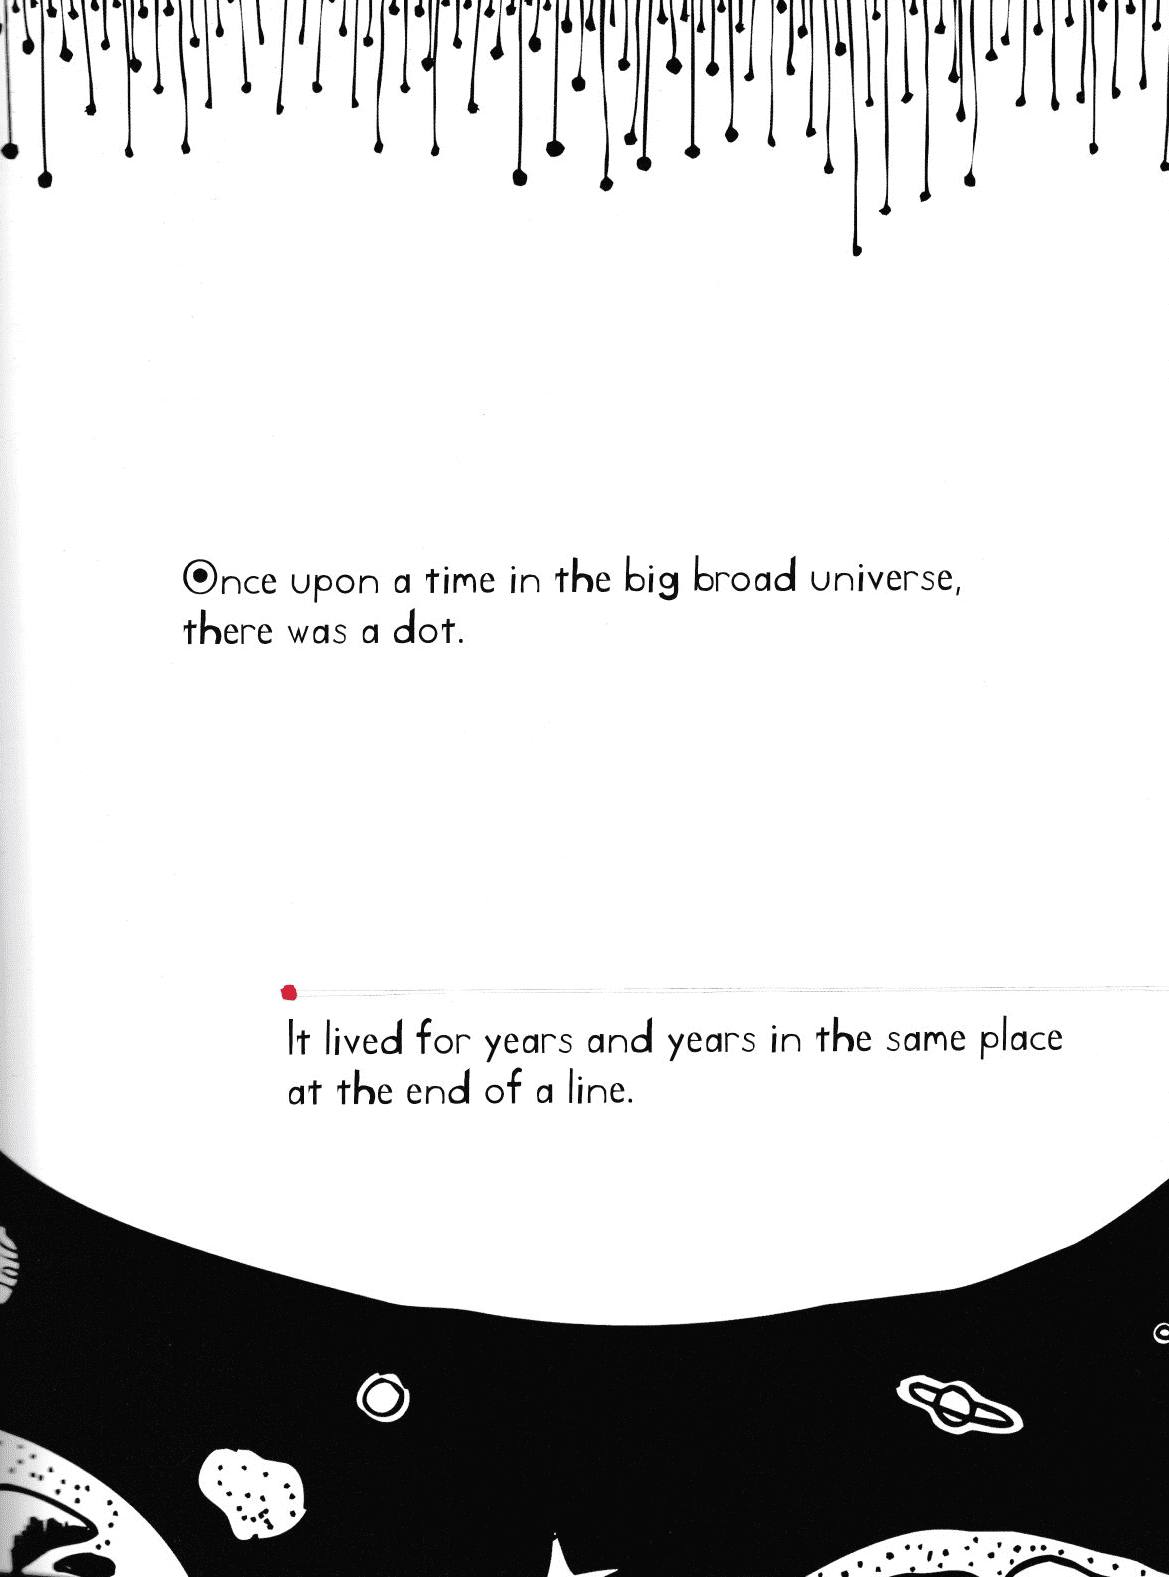 The Dot - by Gulnar Hajo - translated by Ruth Ahmedzai Kemp